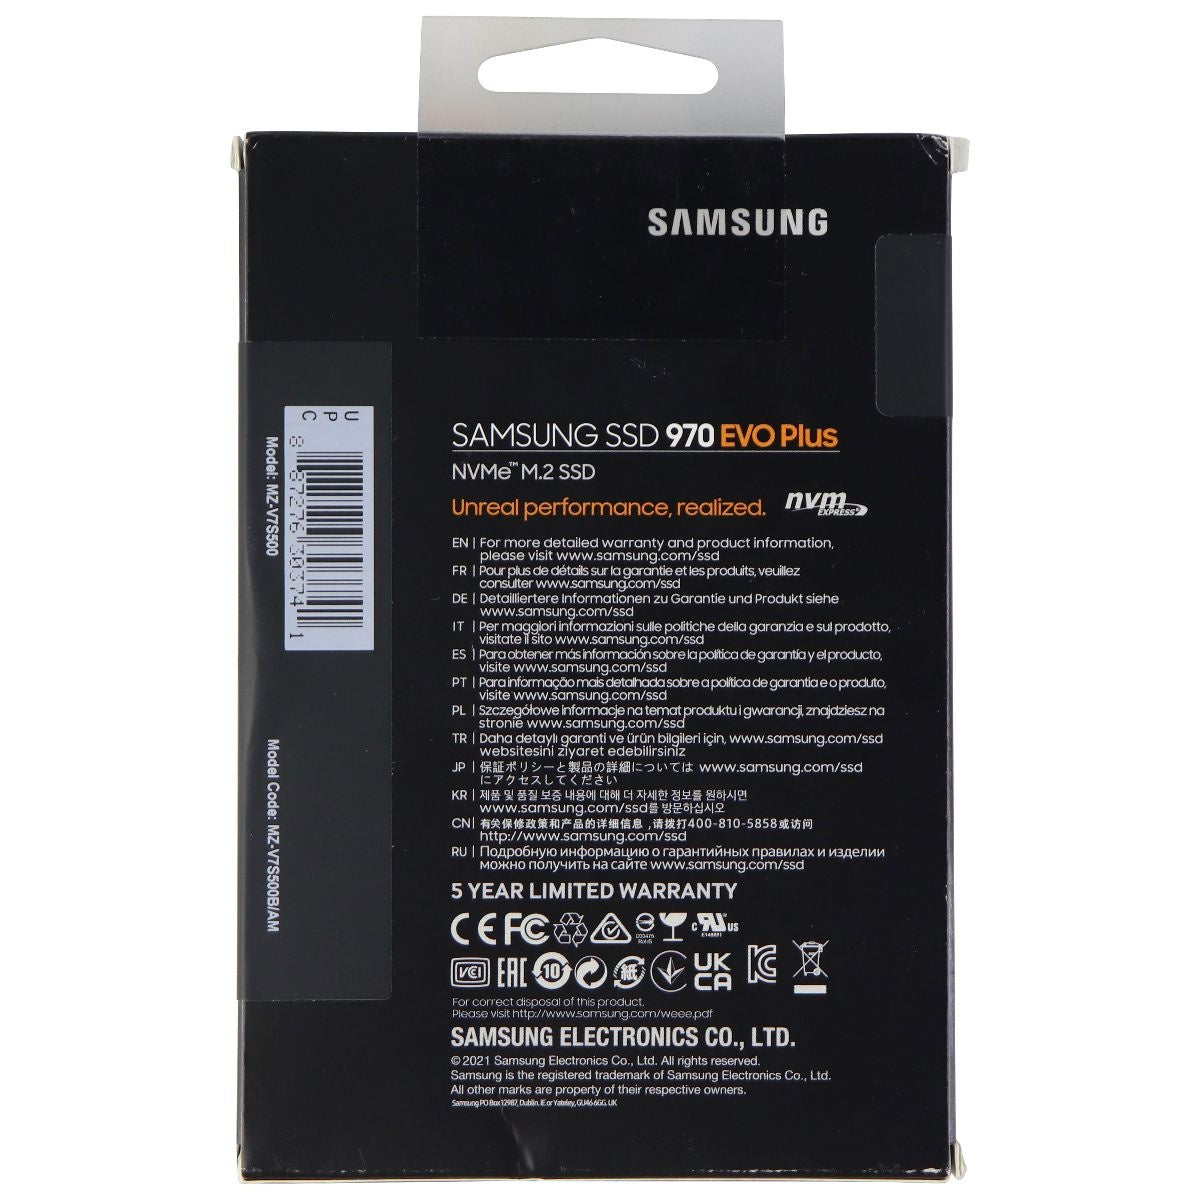 Samsung 970 EVO Plus SSD 500GB M.2 NVMe Internal Solid State V-NAND Drive Digital Storage - Internal Hard Disk Drives, HDD Samsung    - Simple Cell Bulk Wholesale Pricing - USA Seller